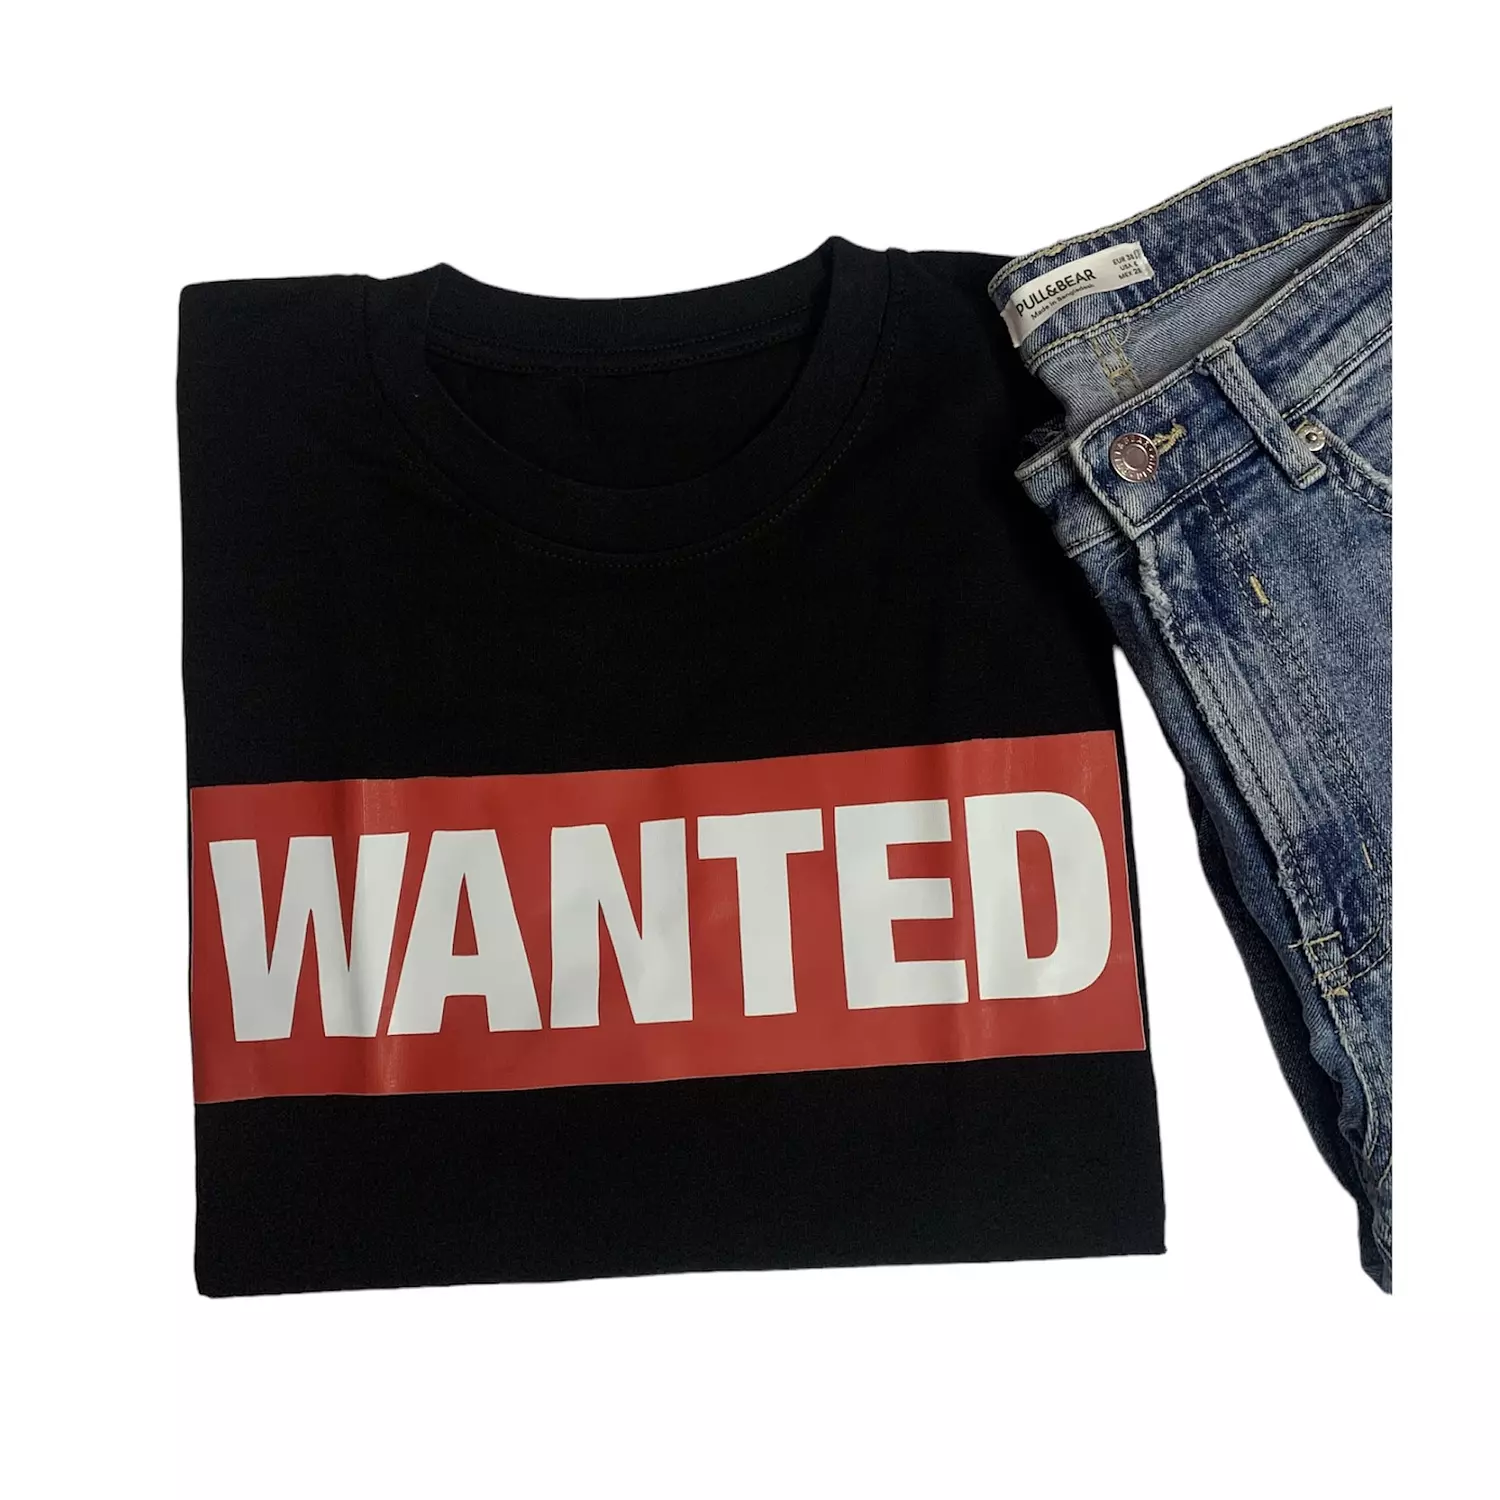 Rick and Morty Wanted T-shirt hover image